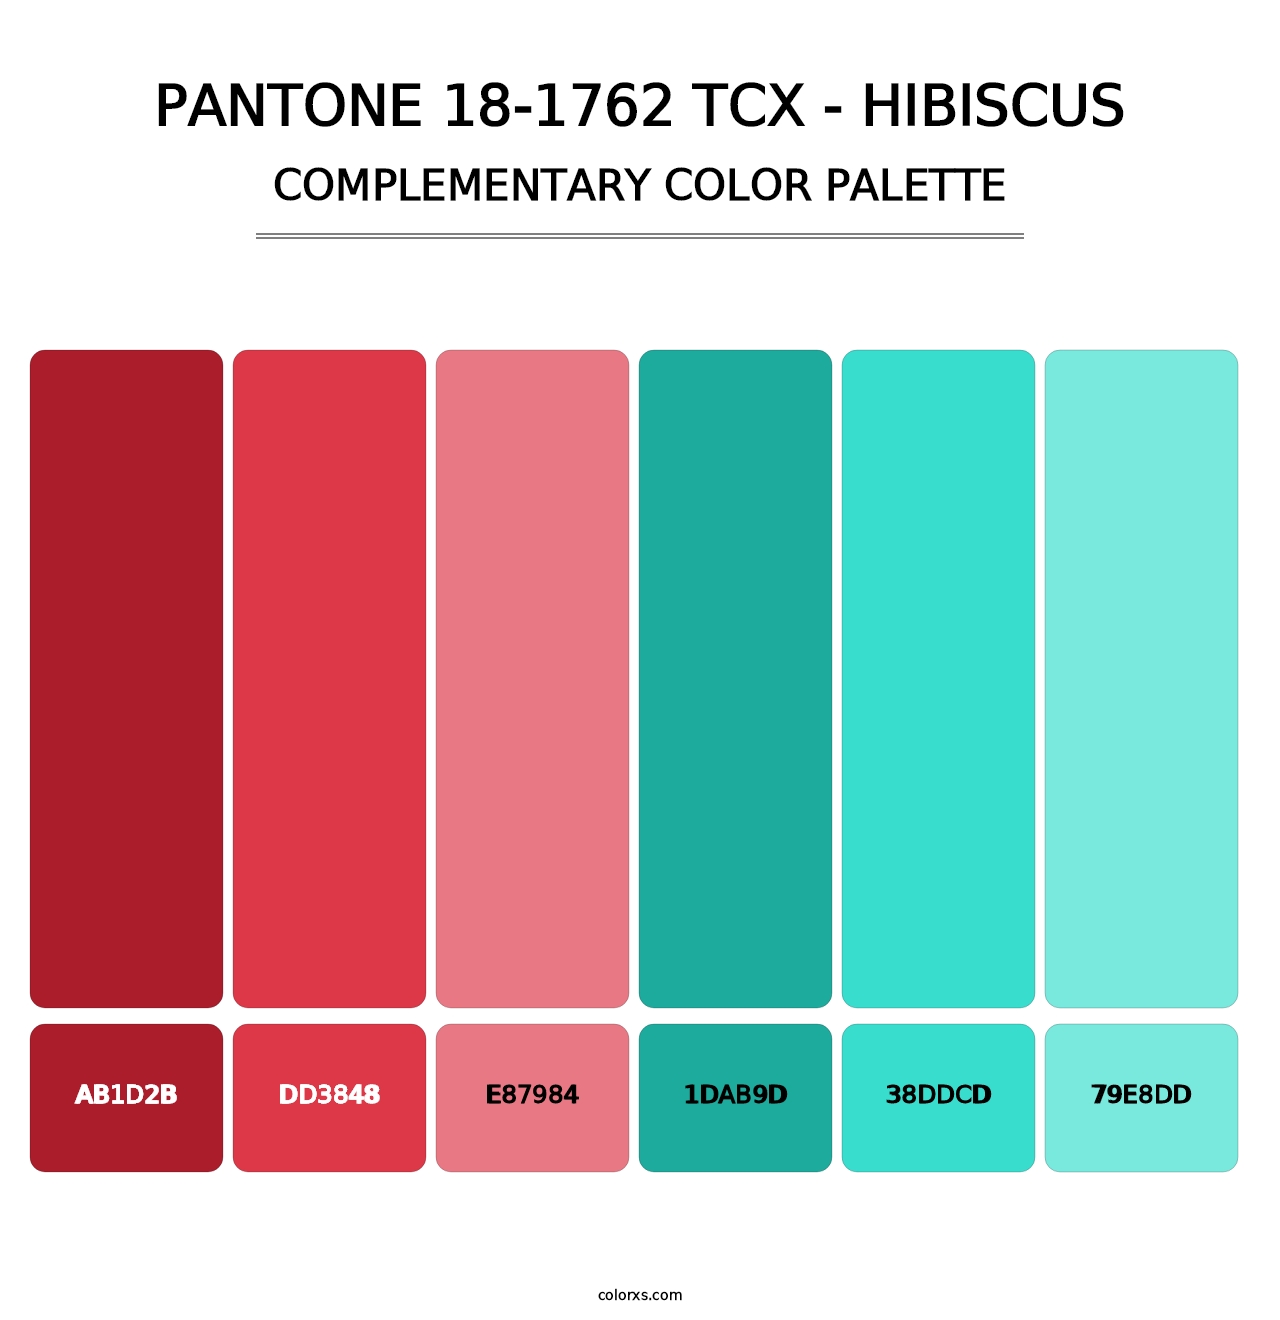 PANTONE 18-1762 TCX - Hibiscus - Complementary Color Palette